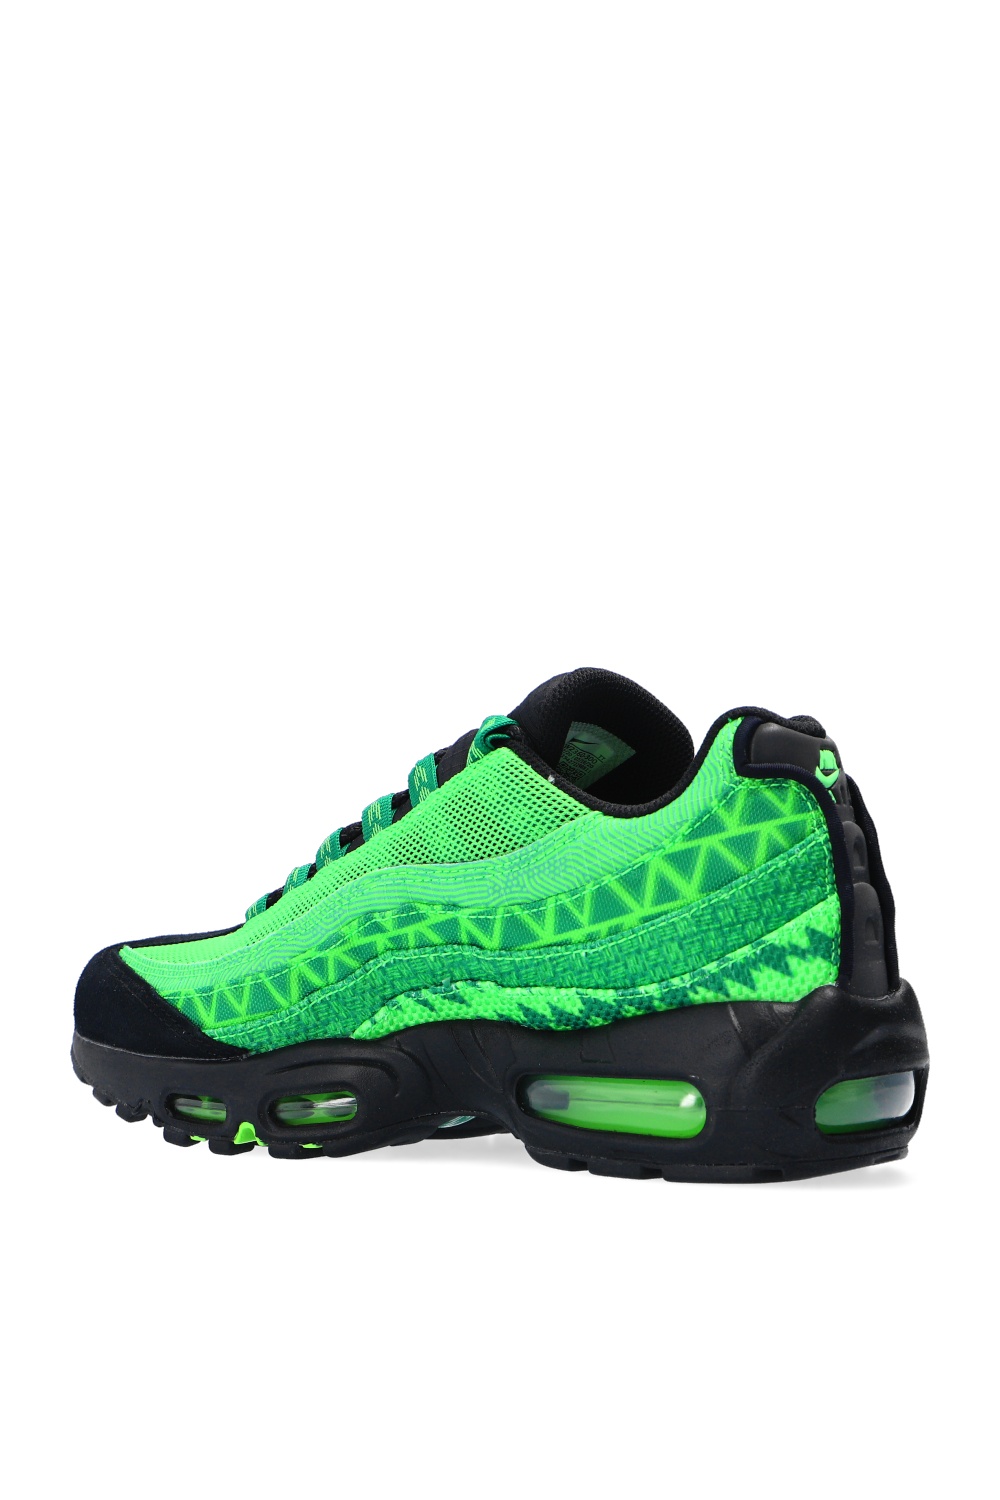 Air Max 95 CTRY' sneakers Nike - Vitkac US